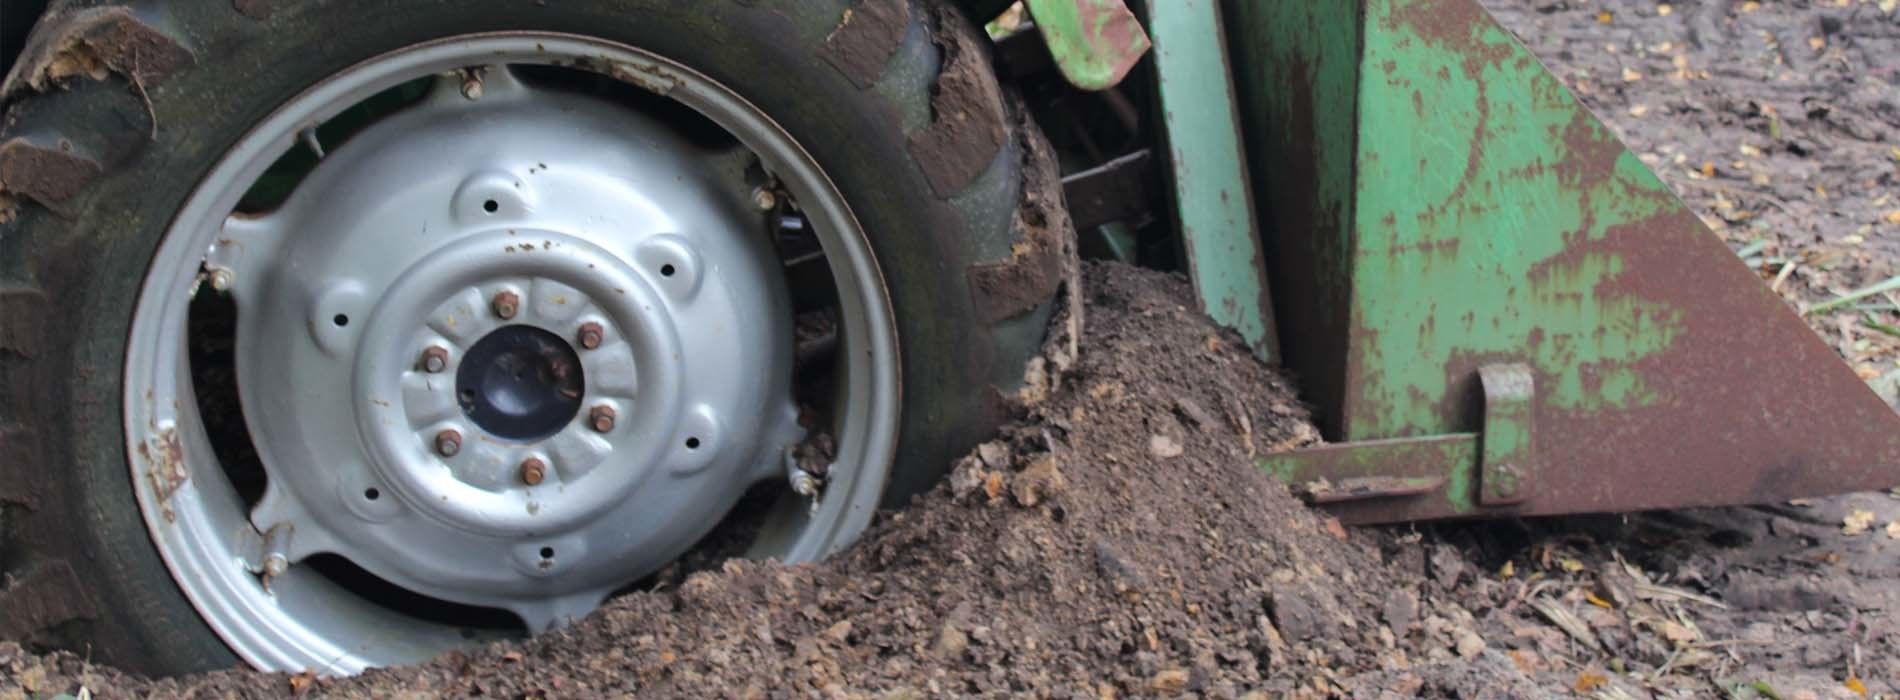 Tractor wheel stuck in the mud